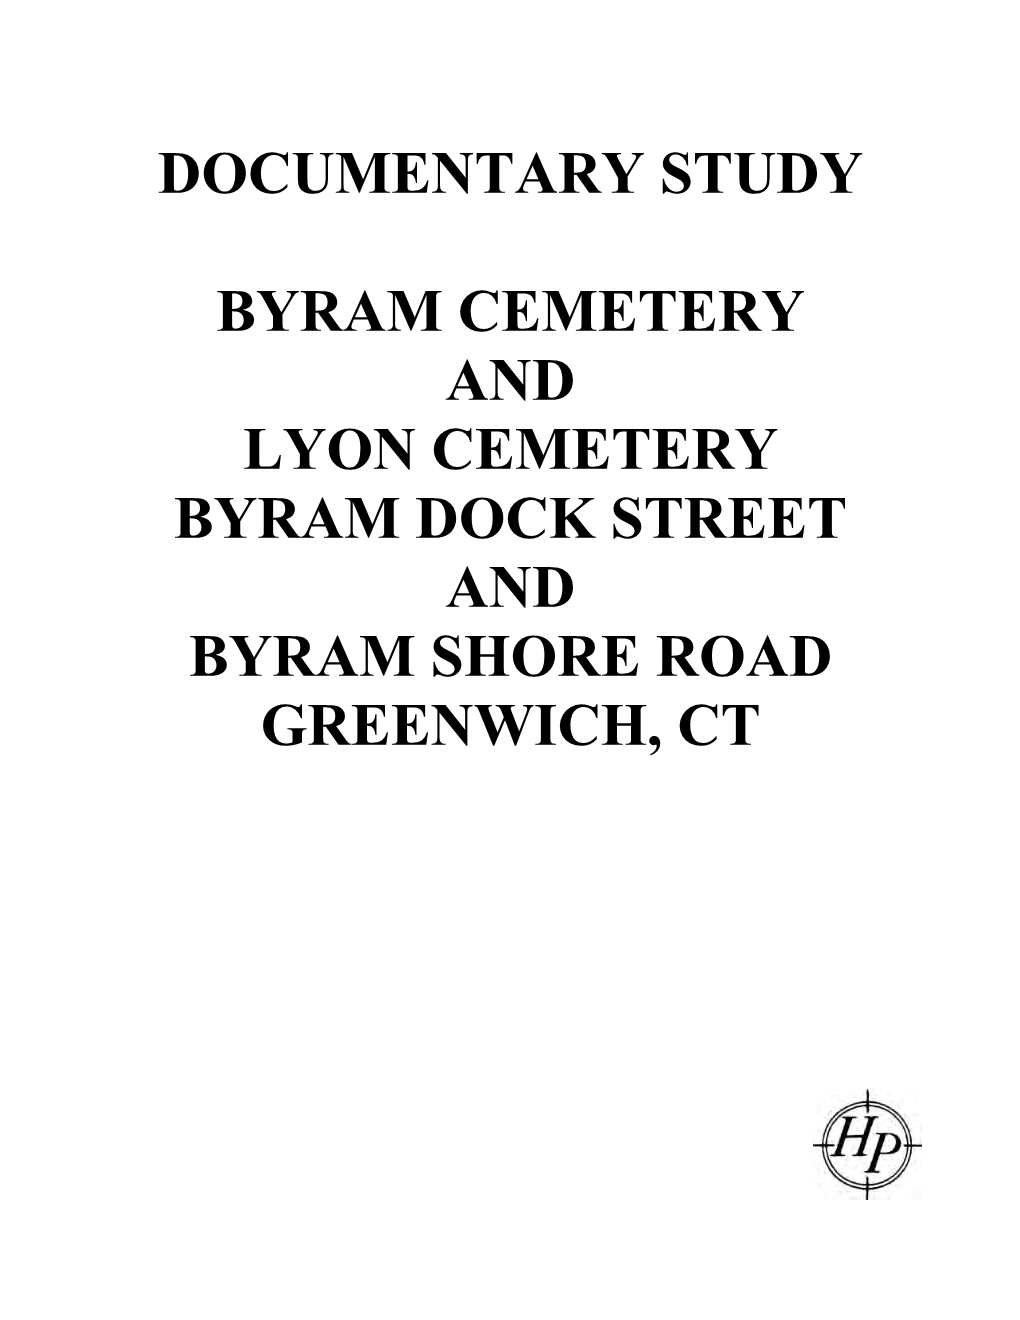 Documentary Study Byram Cemetery and Lyon Cemetery Byram Dock Street and Byram Shore Road Greenwich, CT